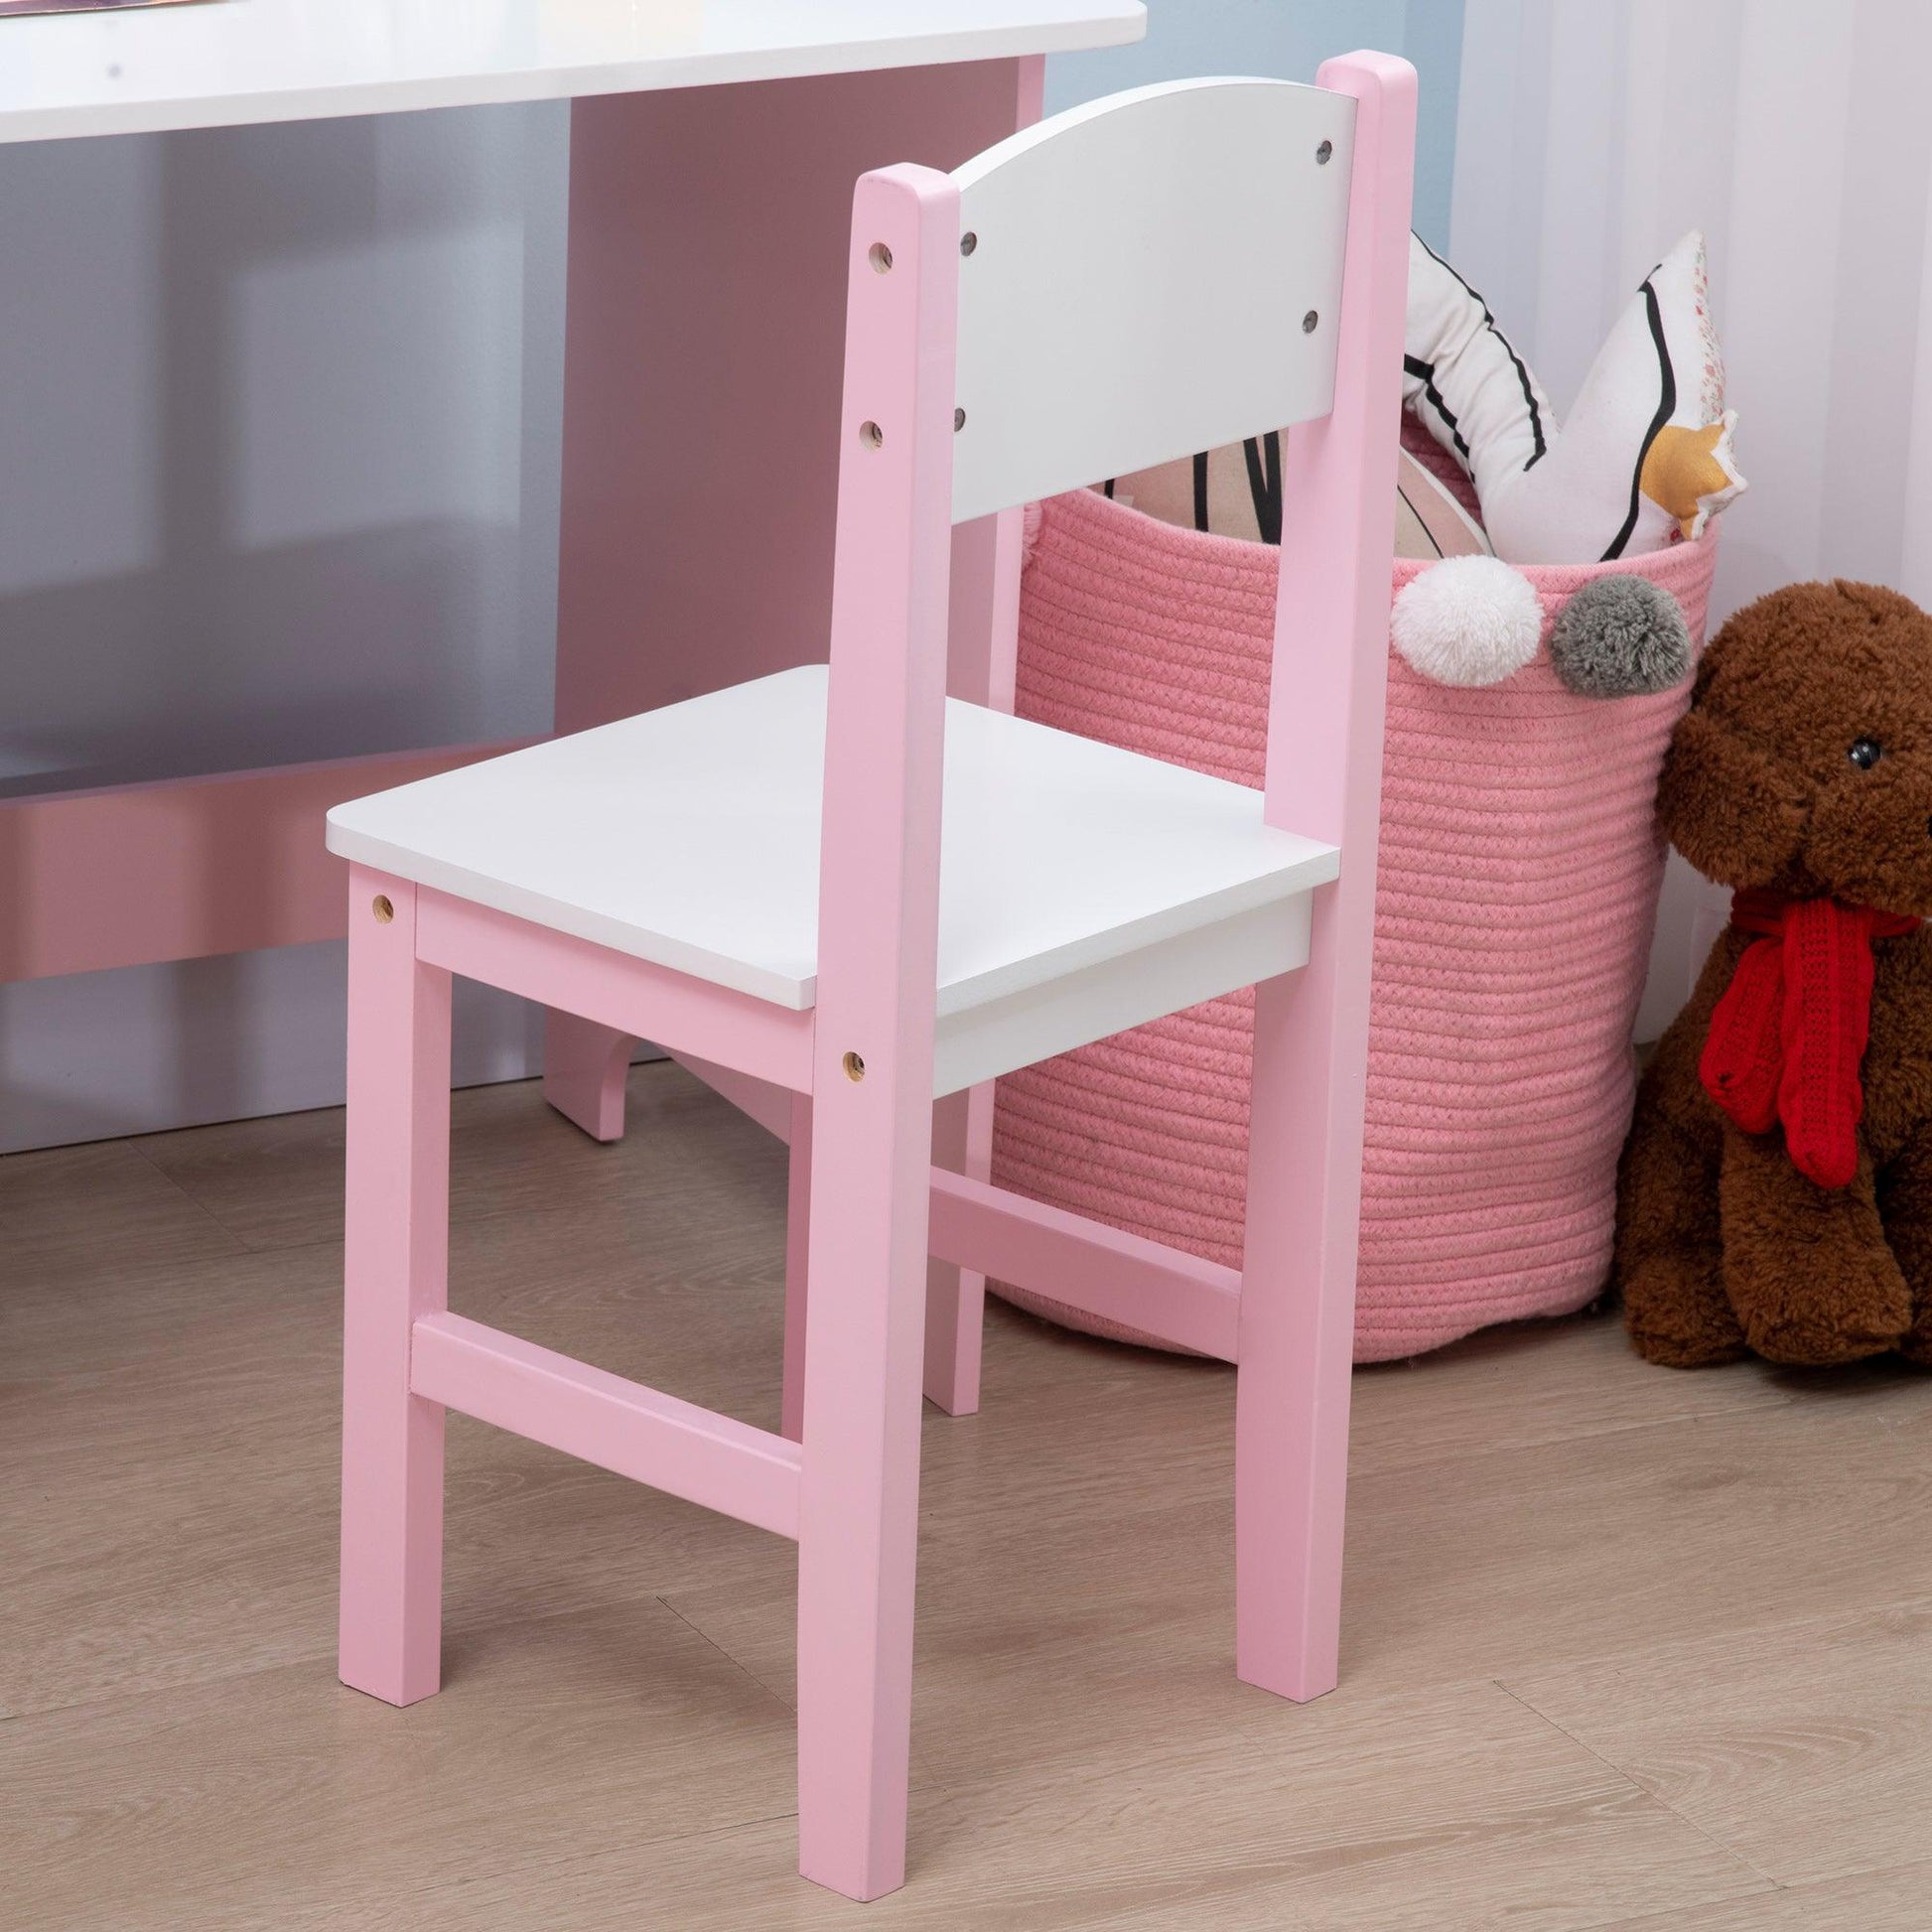 HOMCOM 2 PCs Childrens Table and Chair Set w/ Whiteboard Storage - Pink - ALL4U RETAILER LTD